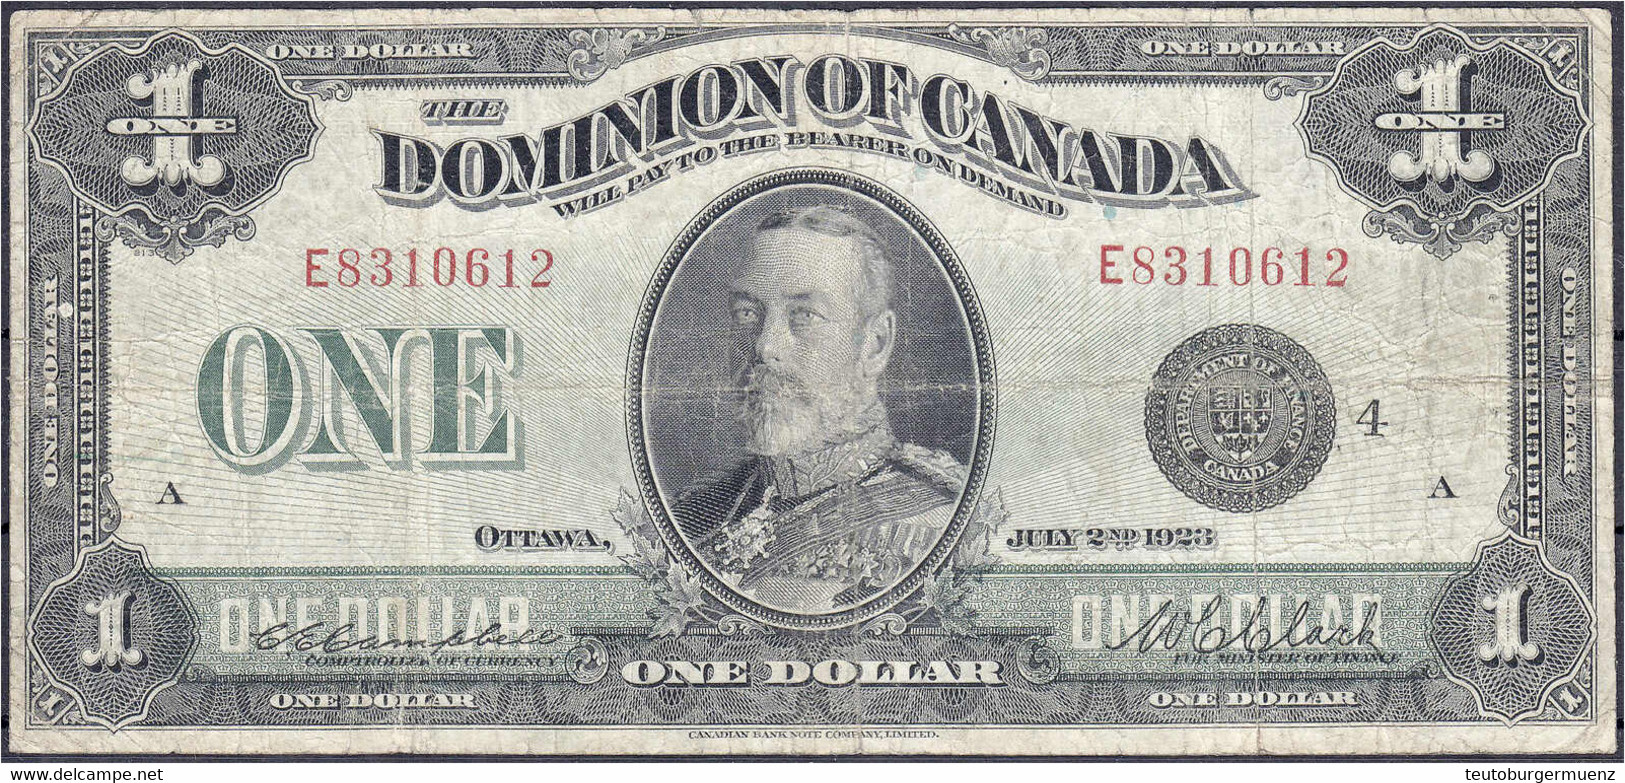 1 Dollar 2.7.1923. IV, Selten. Pick 33p. - Canada